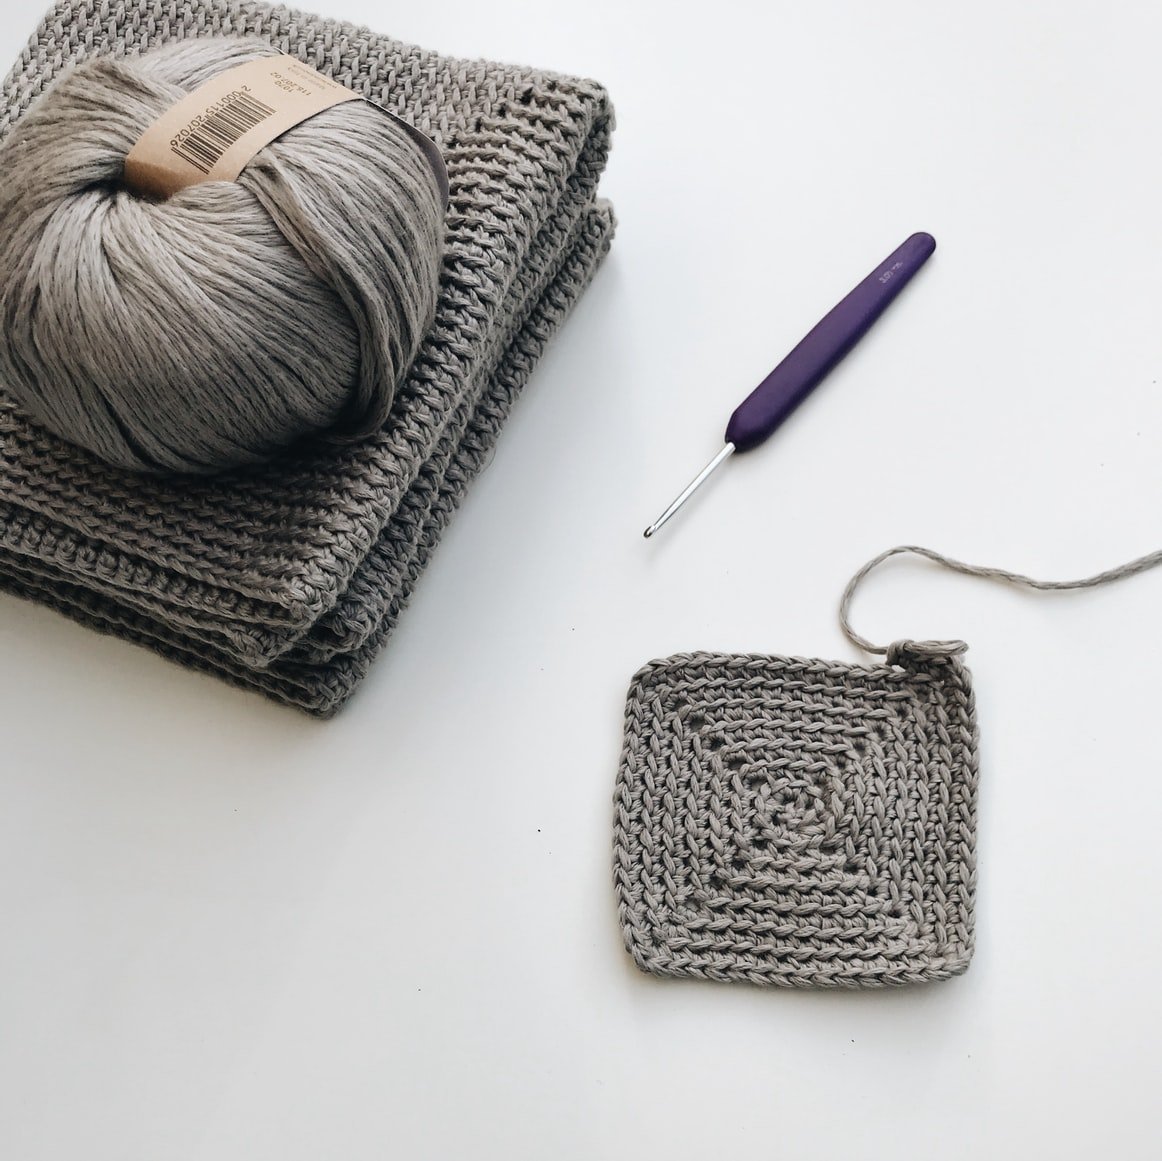 Metal Crochet Hook sizes 2-10mm -Craft Knitting Yarn Needles Wire